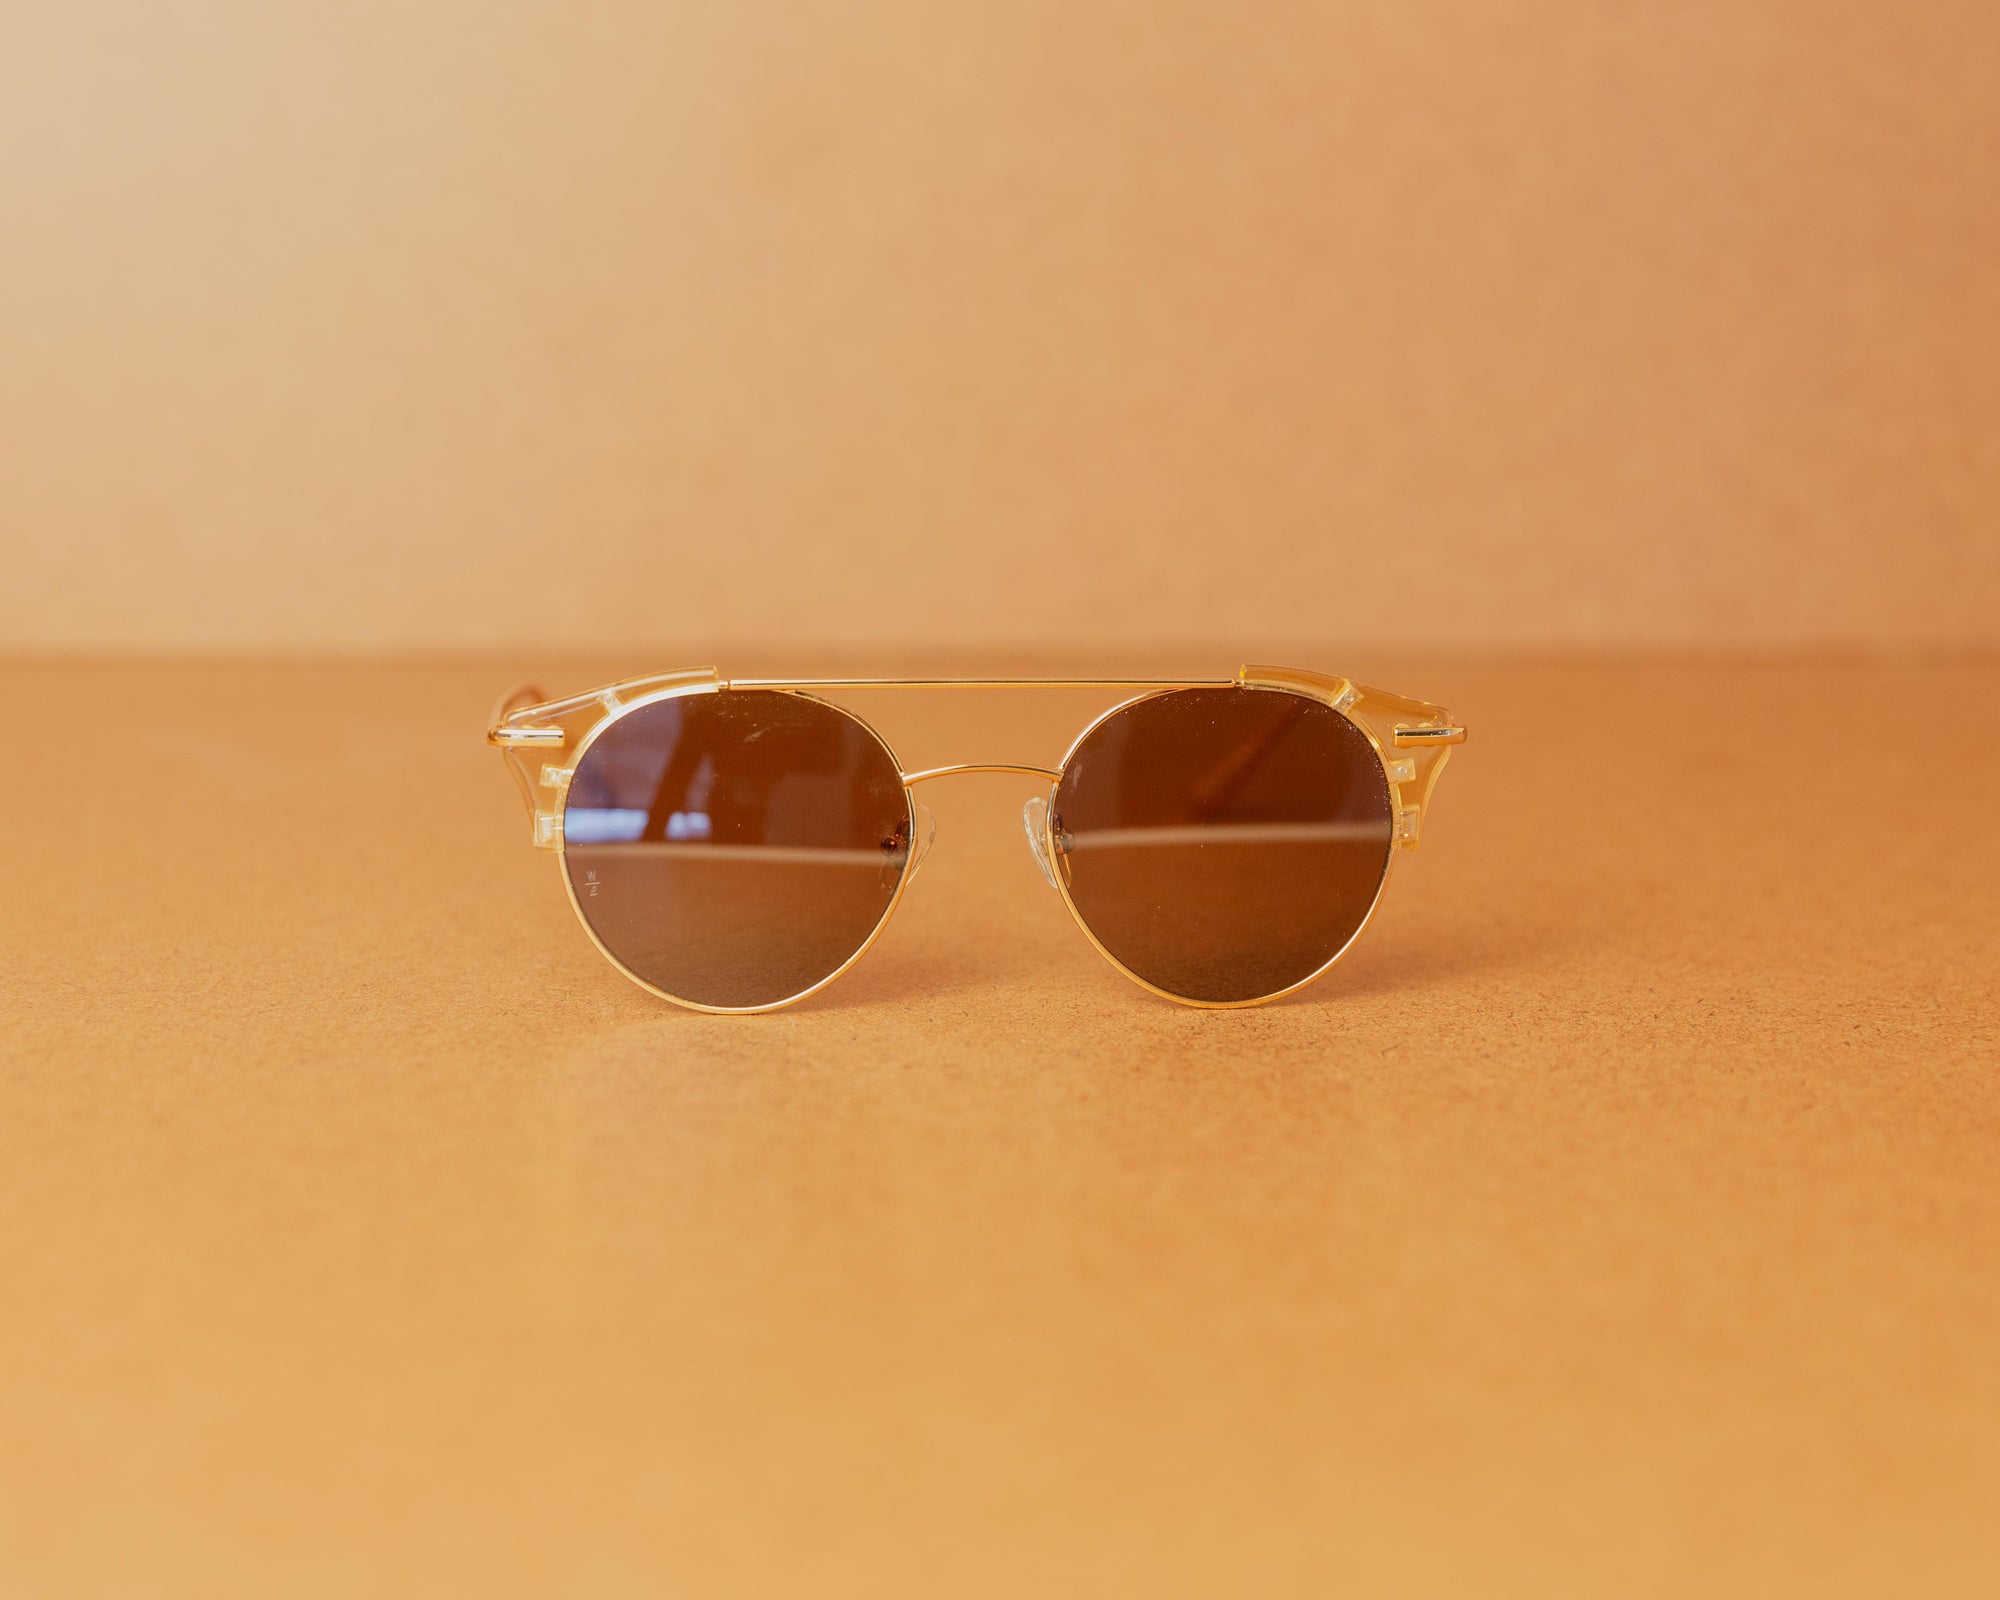 Wonderland Rialto Sunglasses in Clear Beach Glass/Bronze